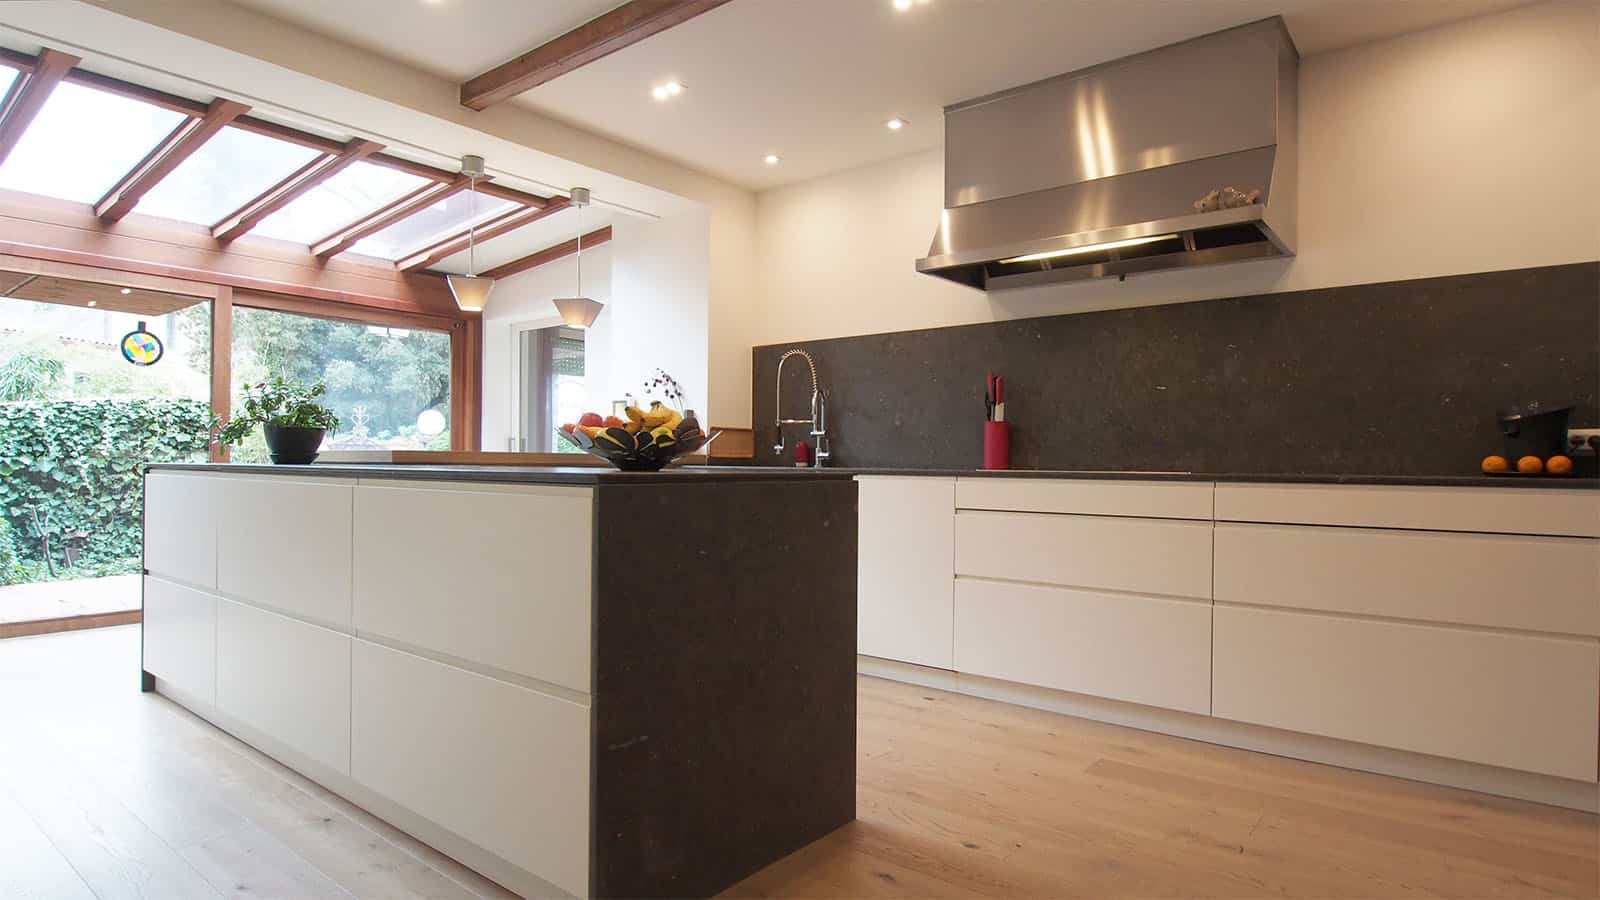 Ingrid, superb kitchen with views and light - Glow Rehabilita